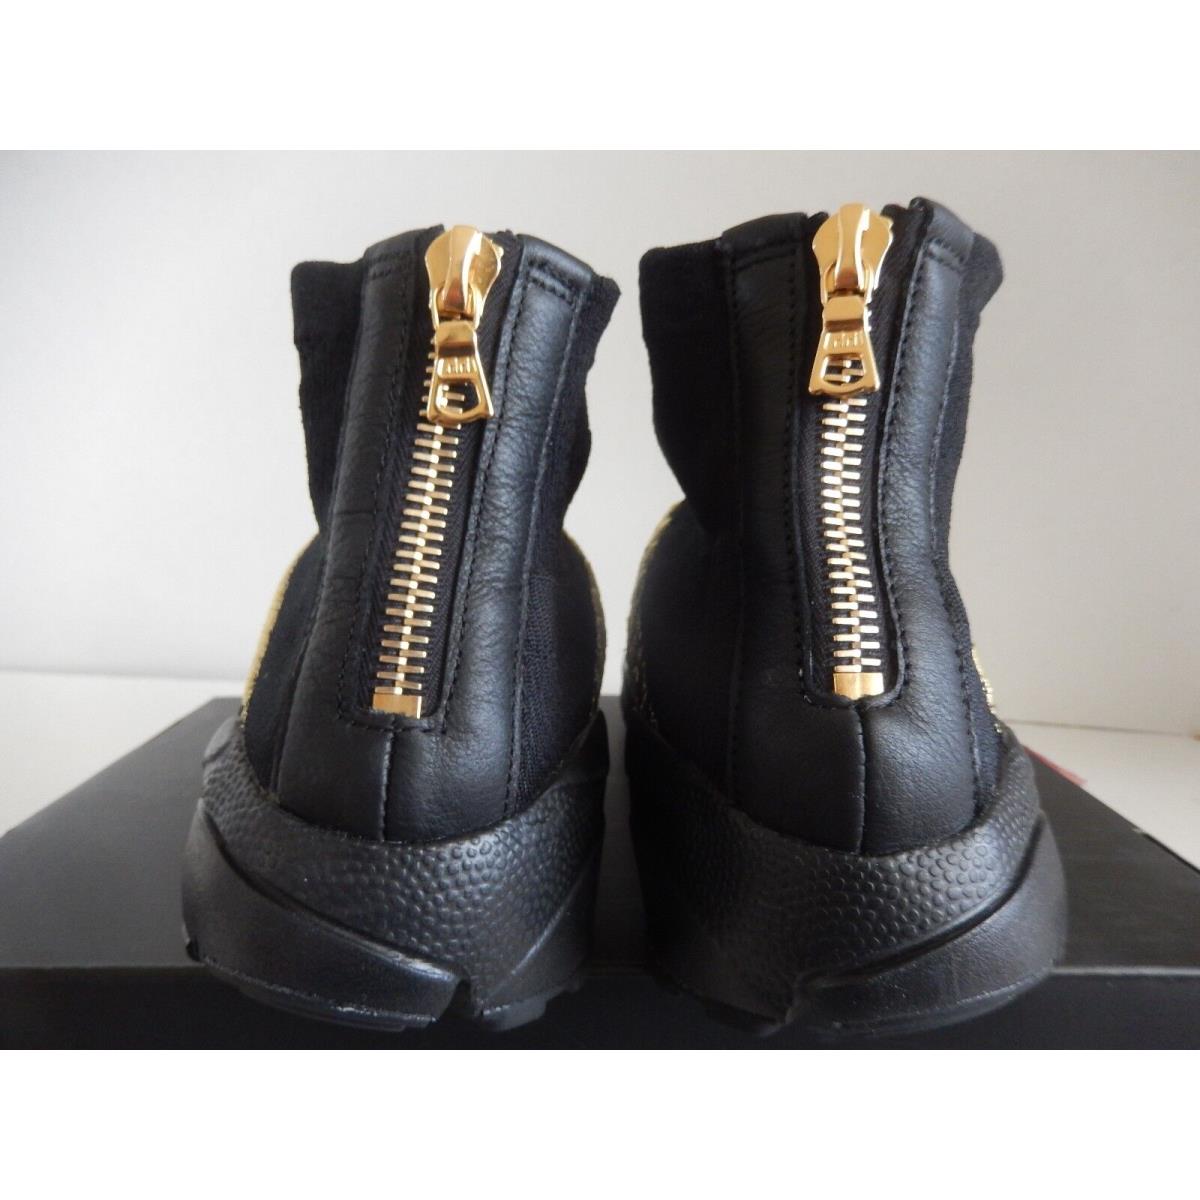 Nike shoes Footscape Magista - Black 2